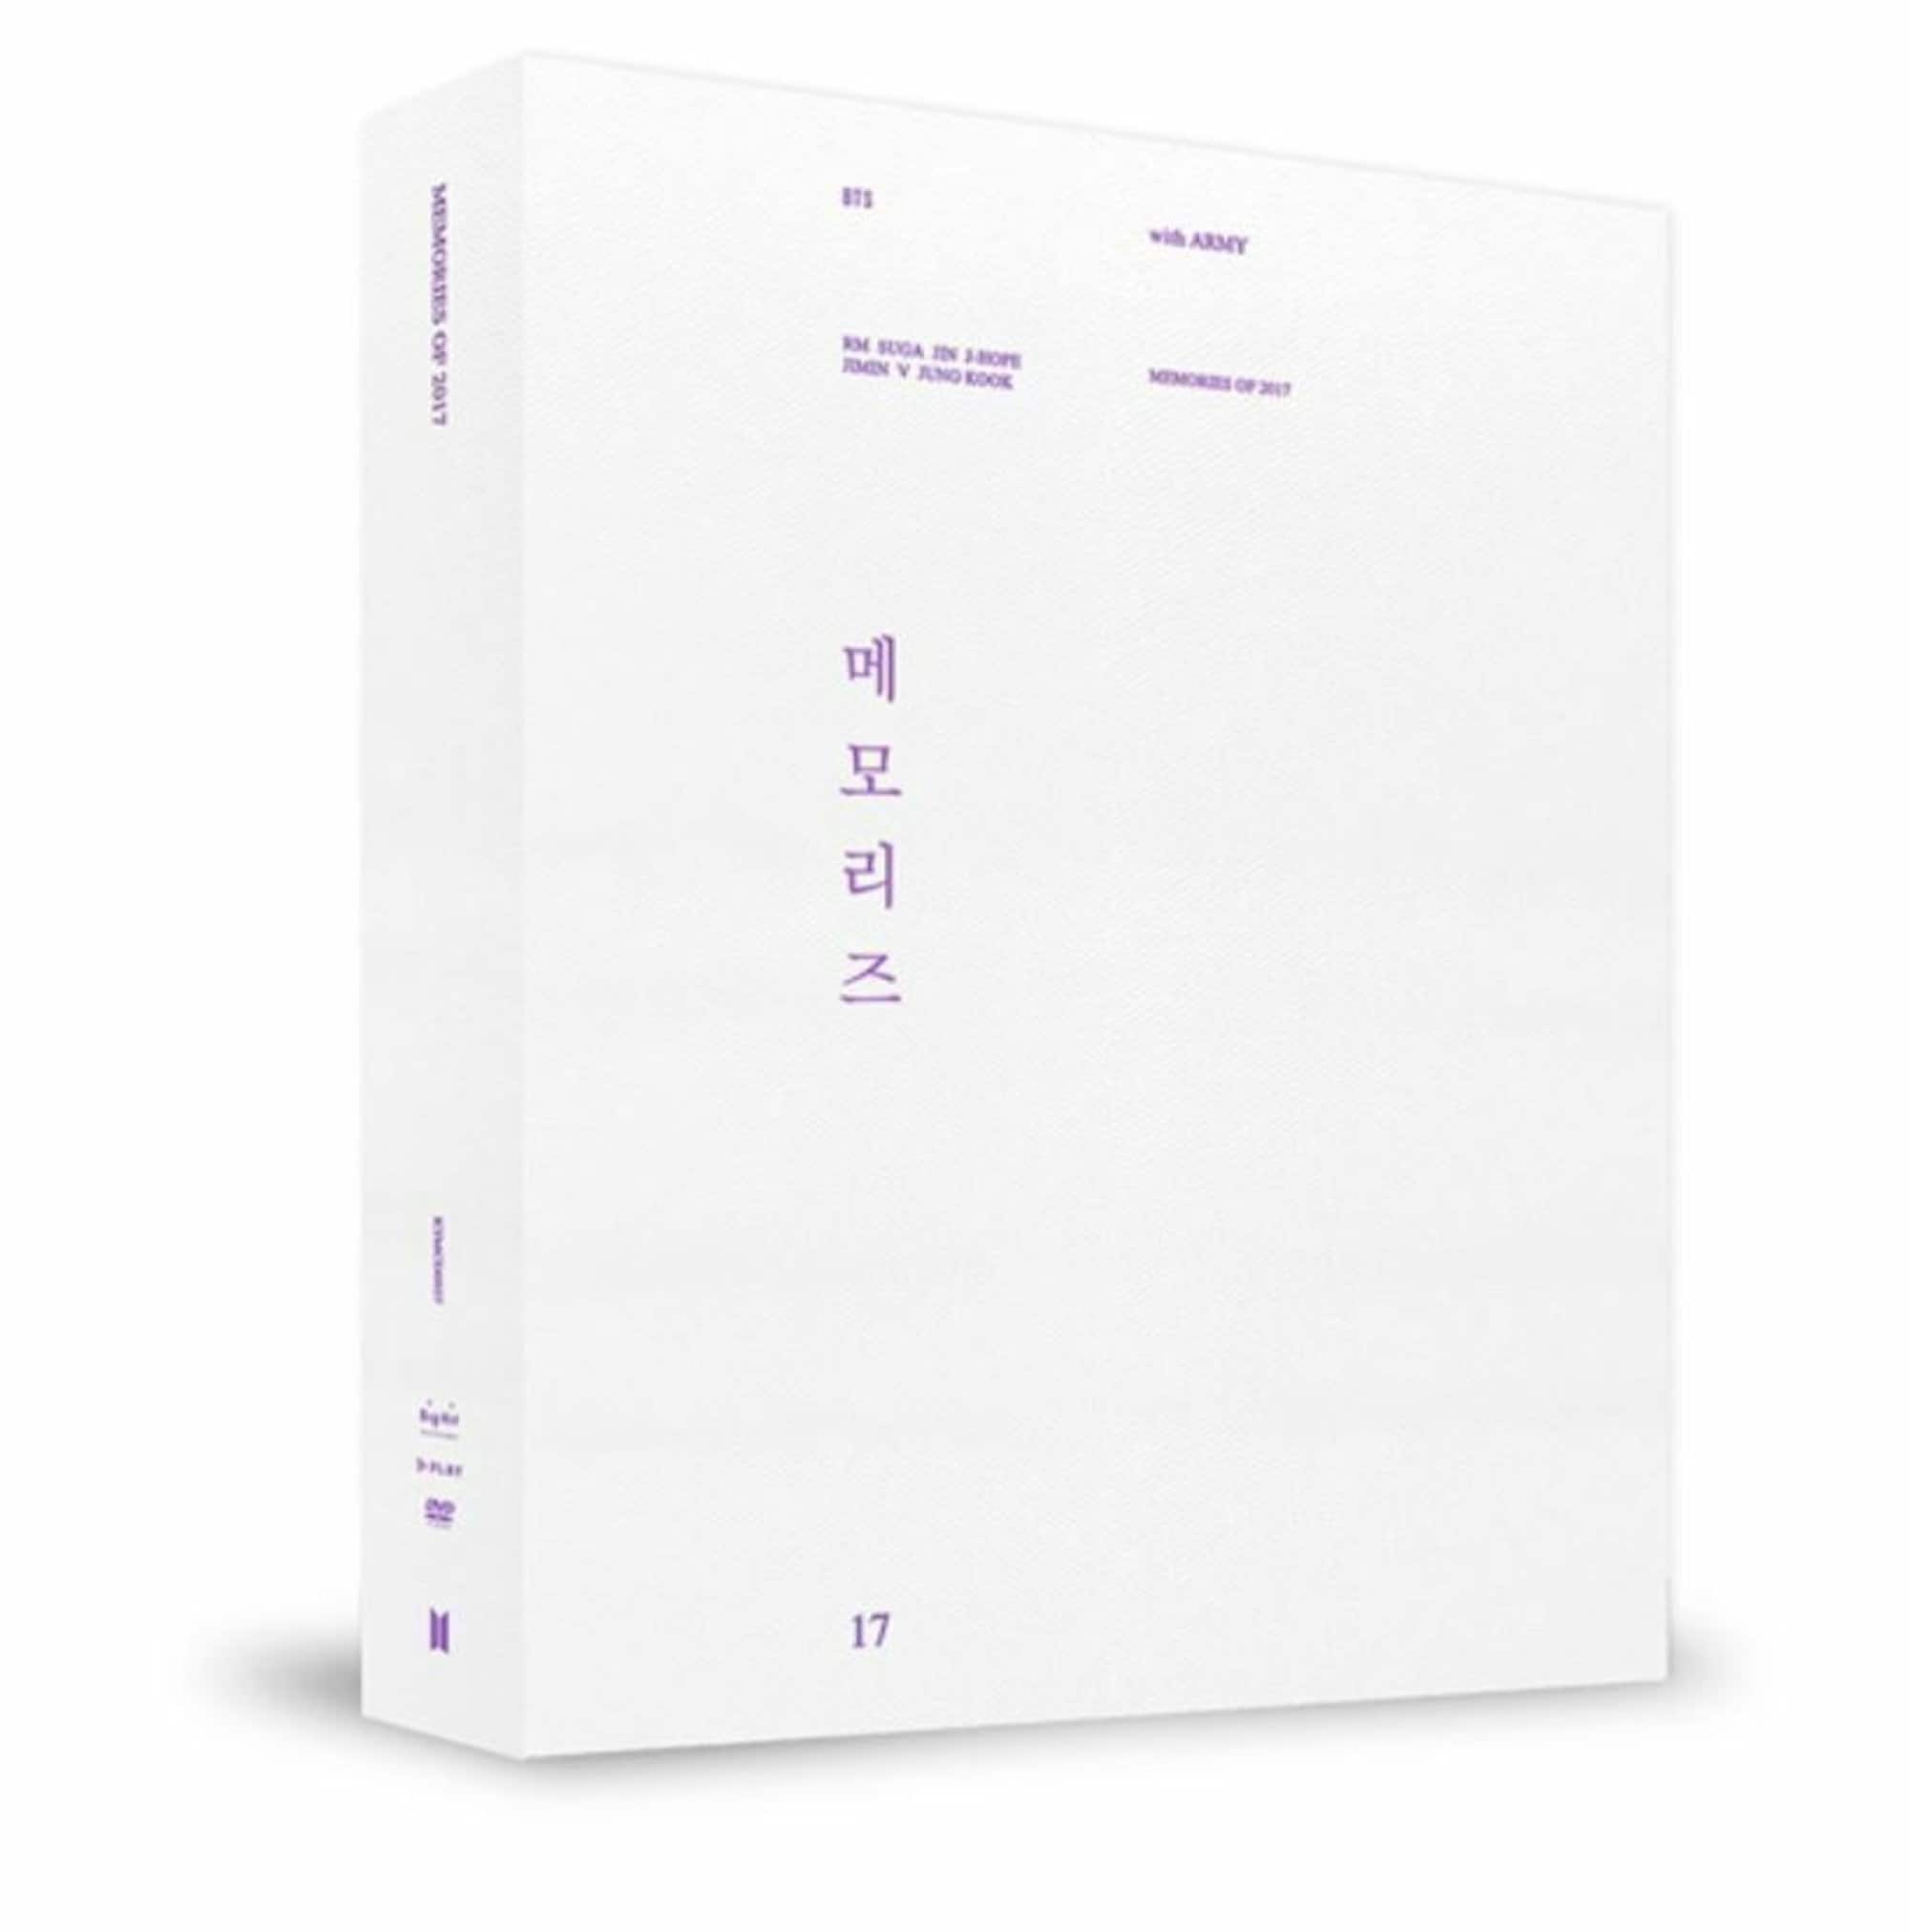 BTS Memories of 2017 DVD Full Package With 1 Random Original - Etsy